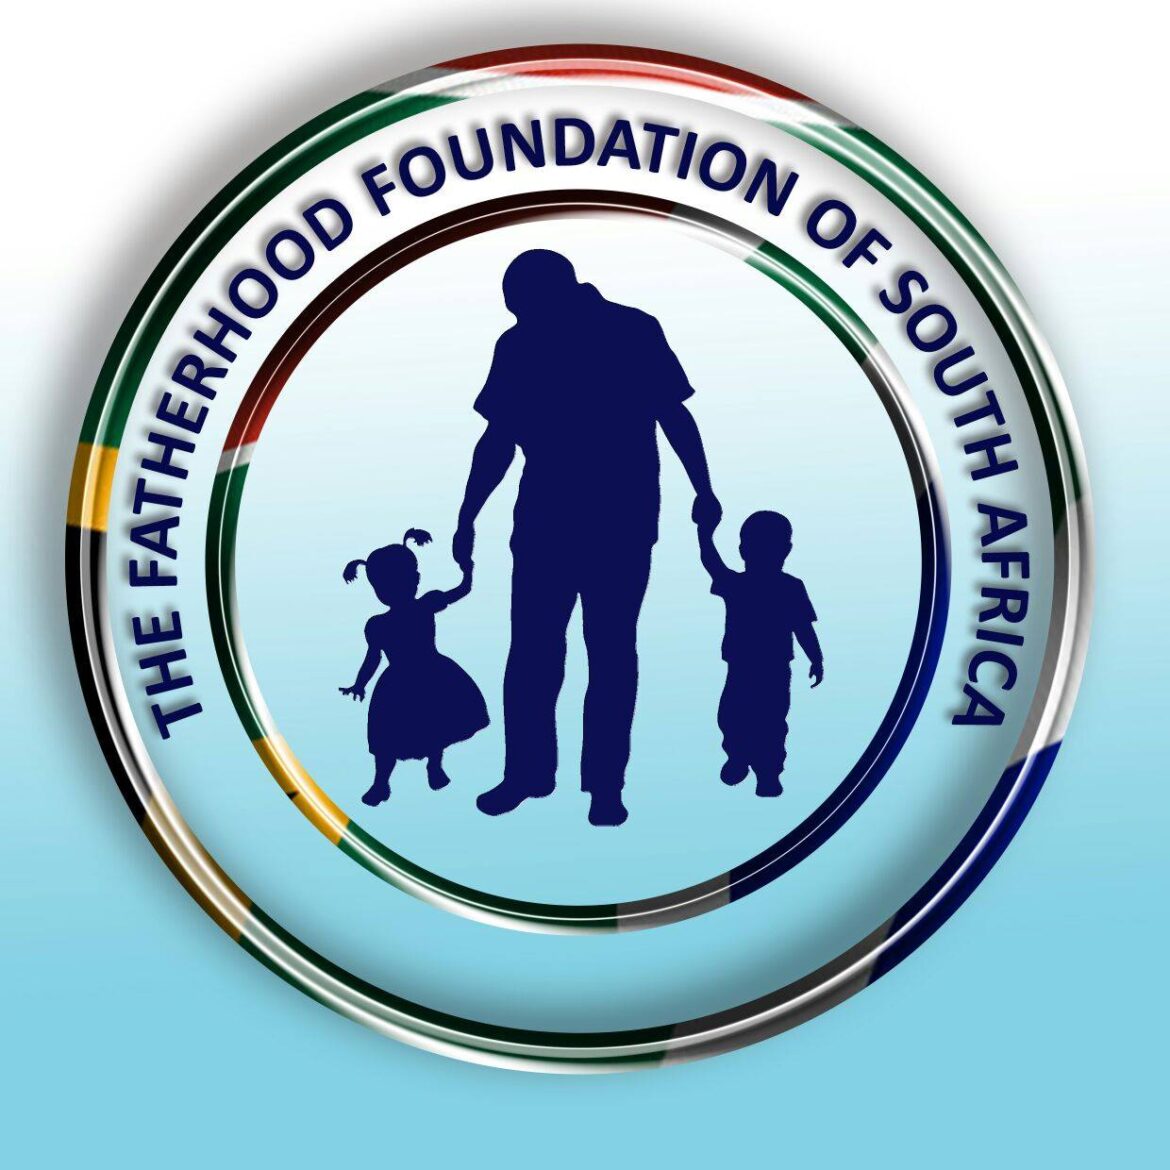 Fatherhood foundation